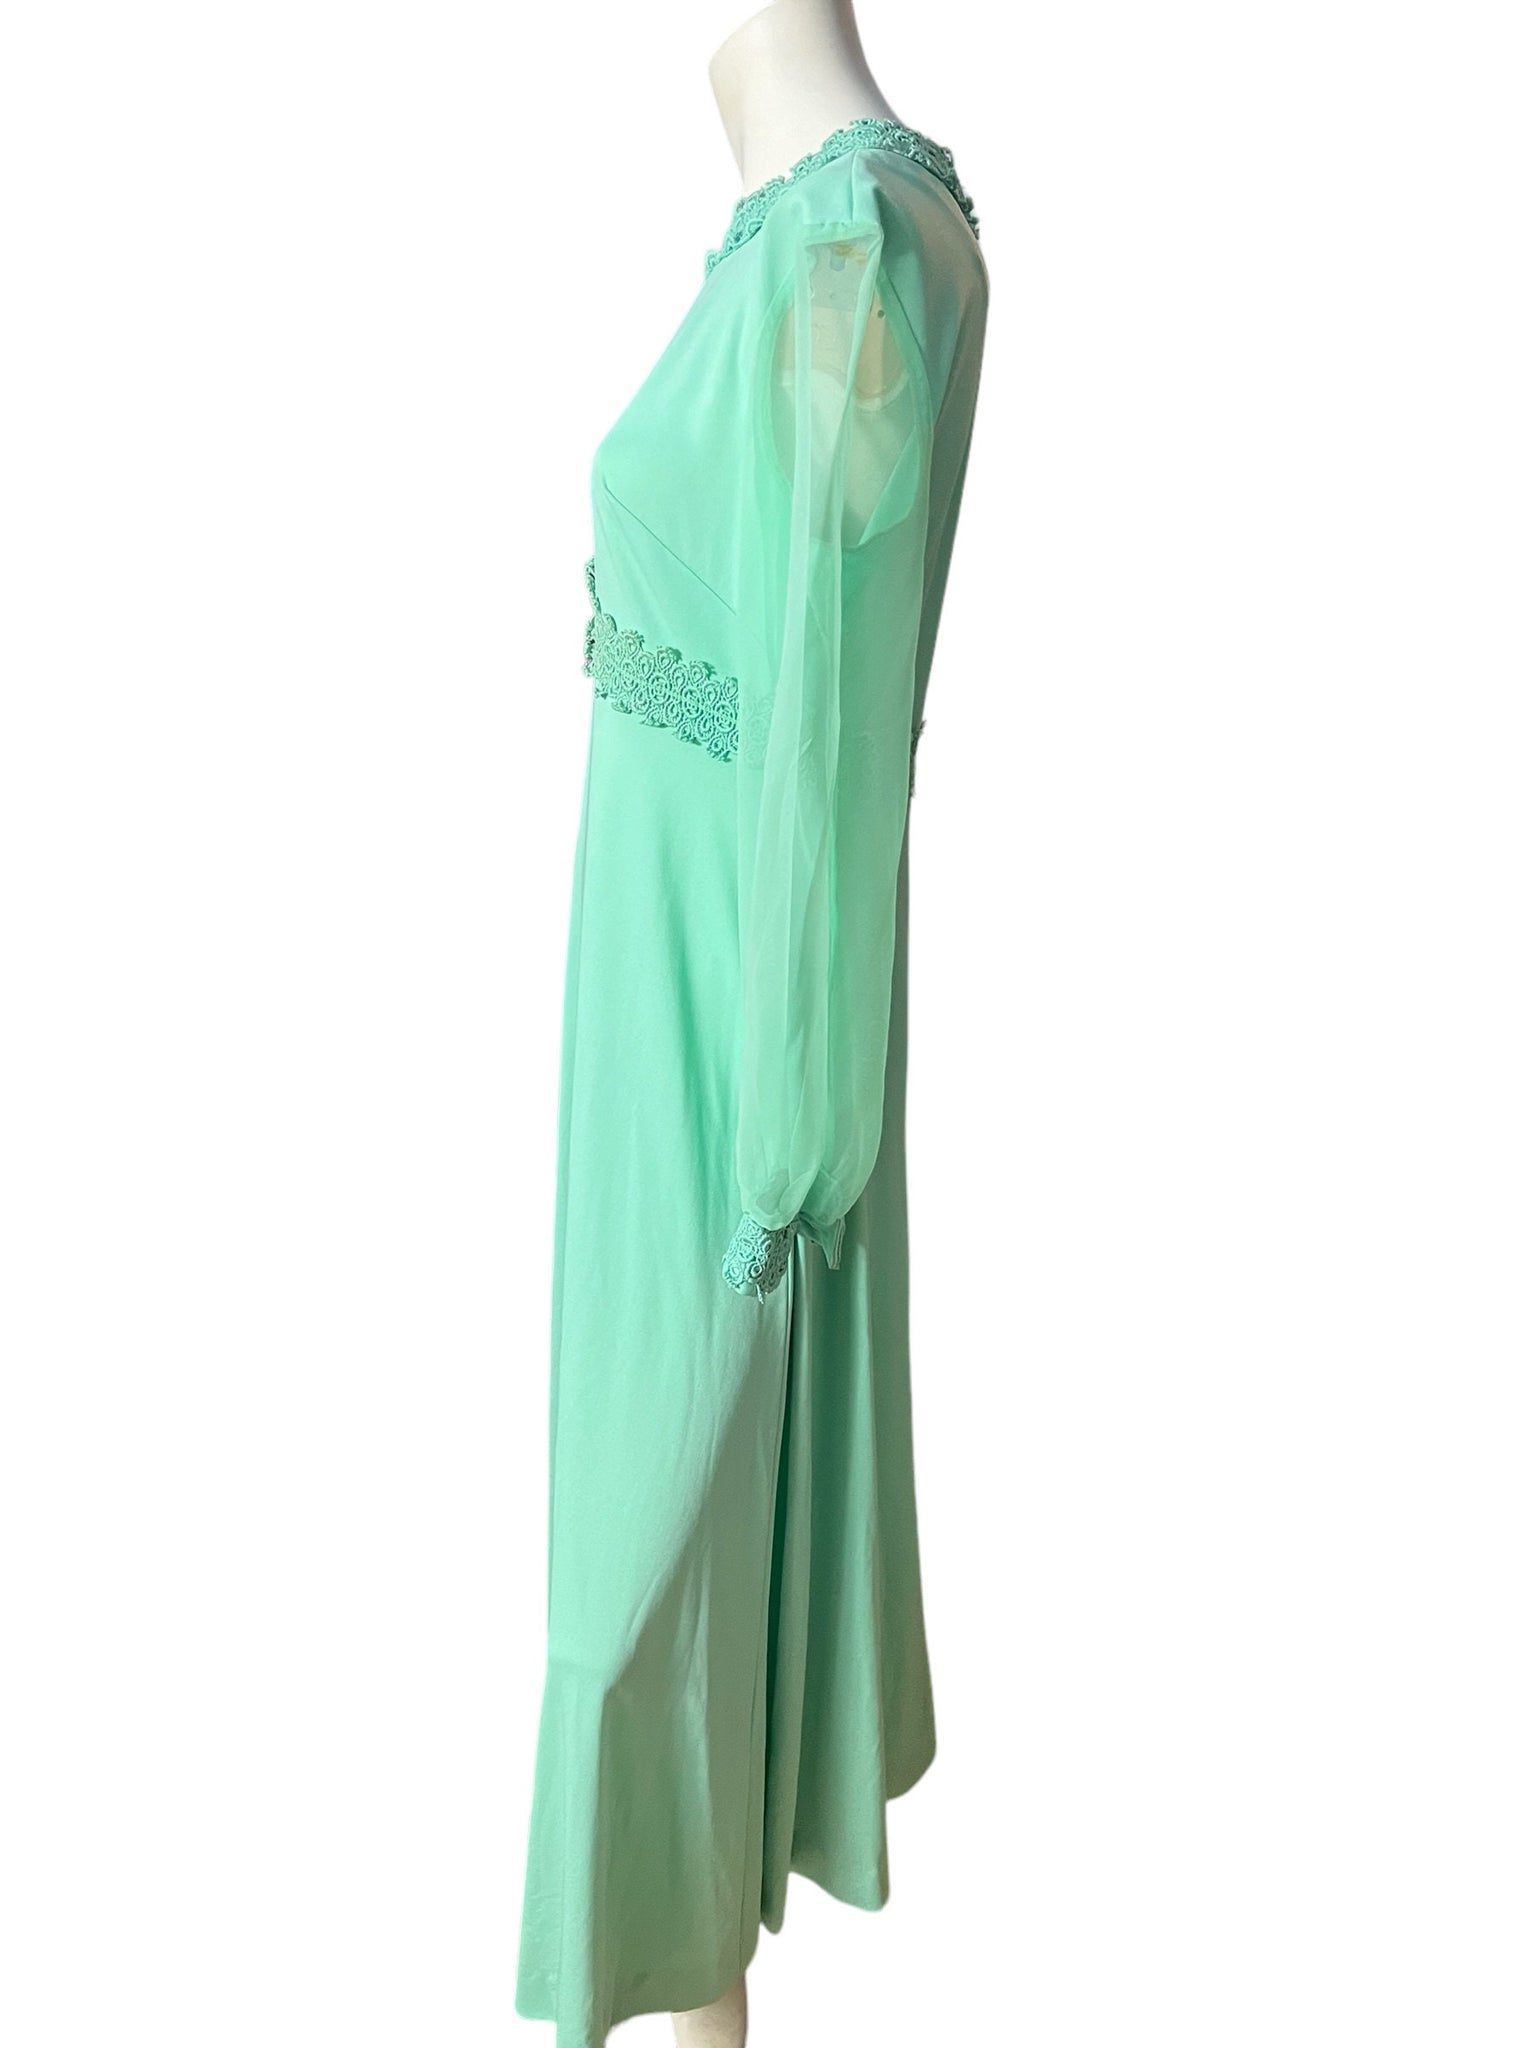 Vintage 70's green maxi dress L